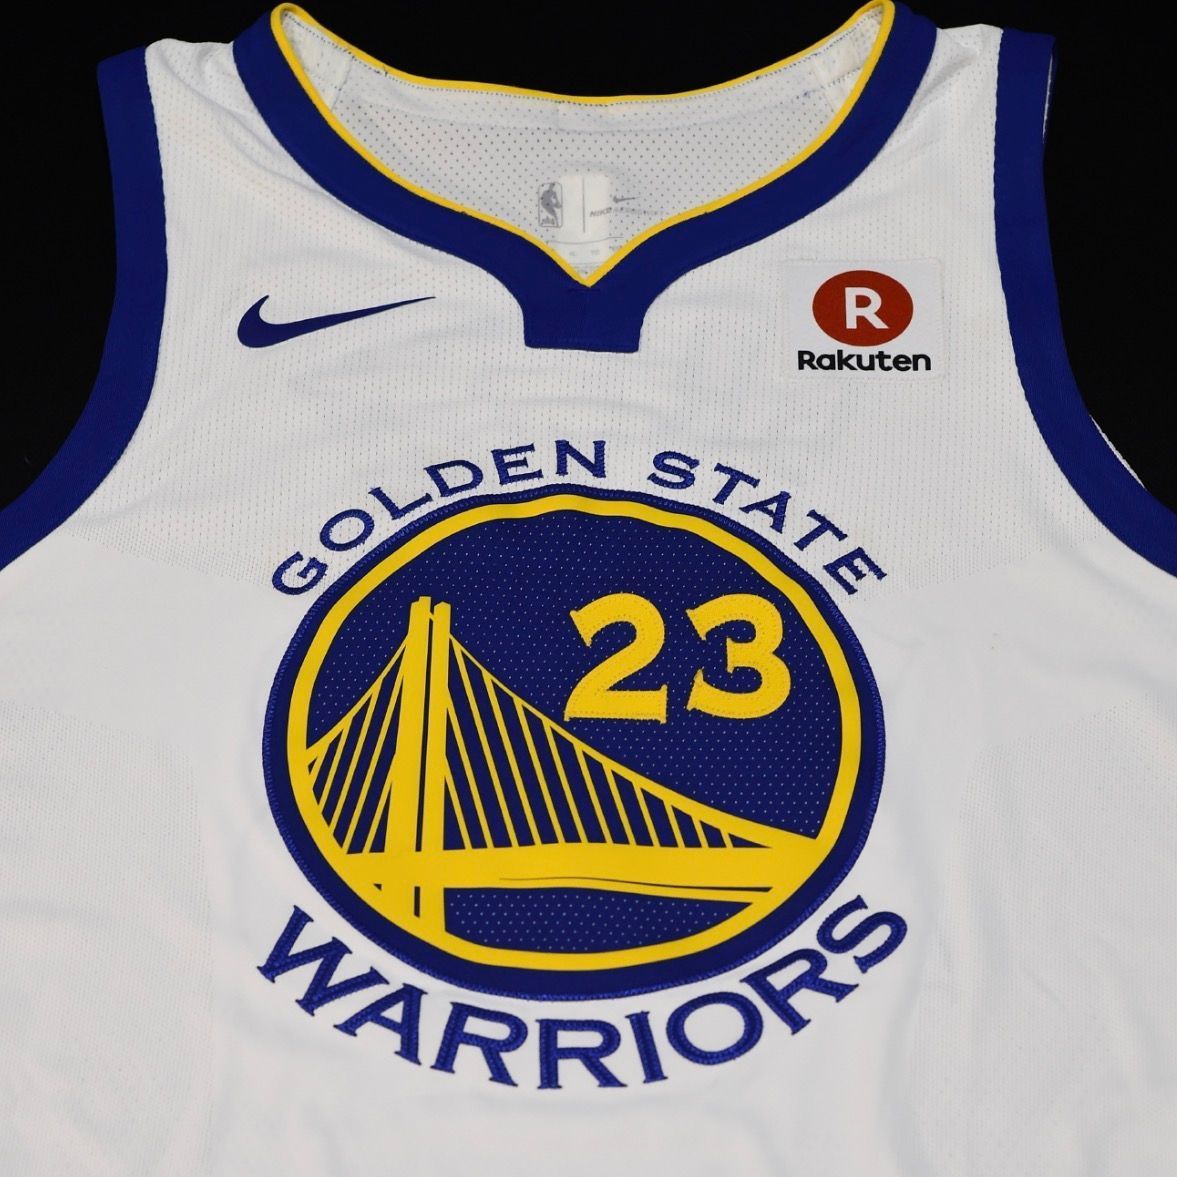 Golden State Warriors sign jersey patch advertising deal with Rakuten - ESPN